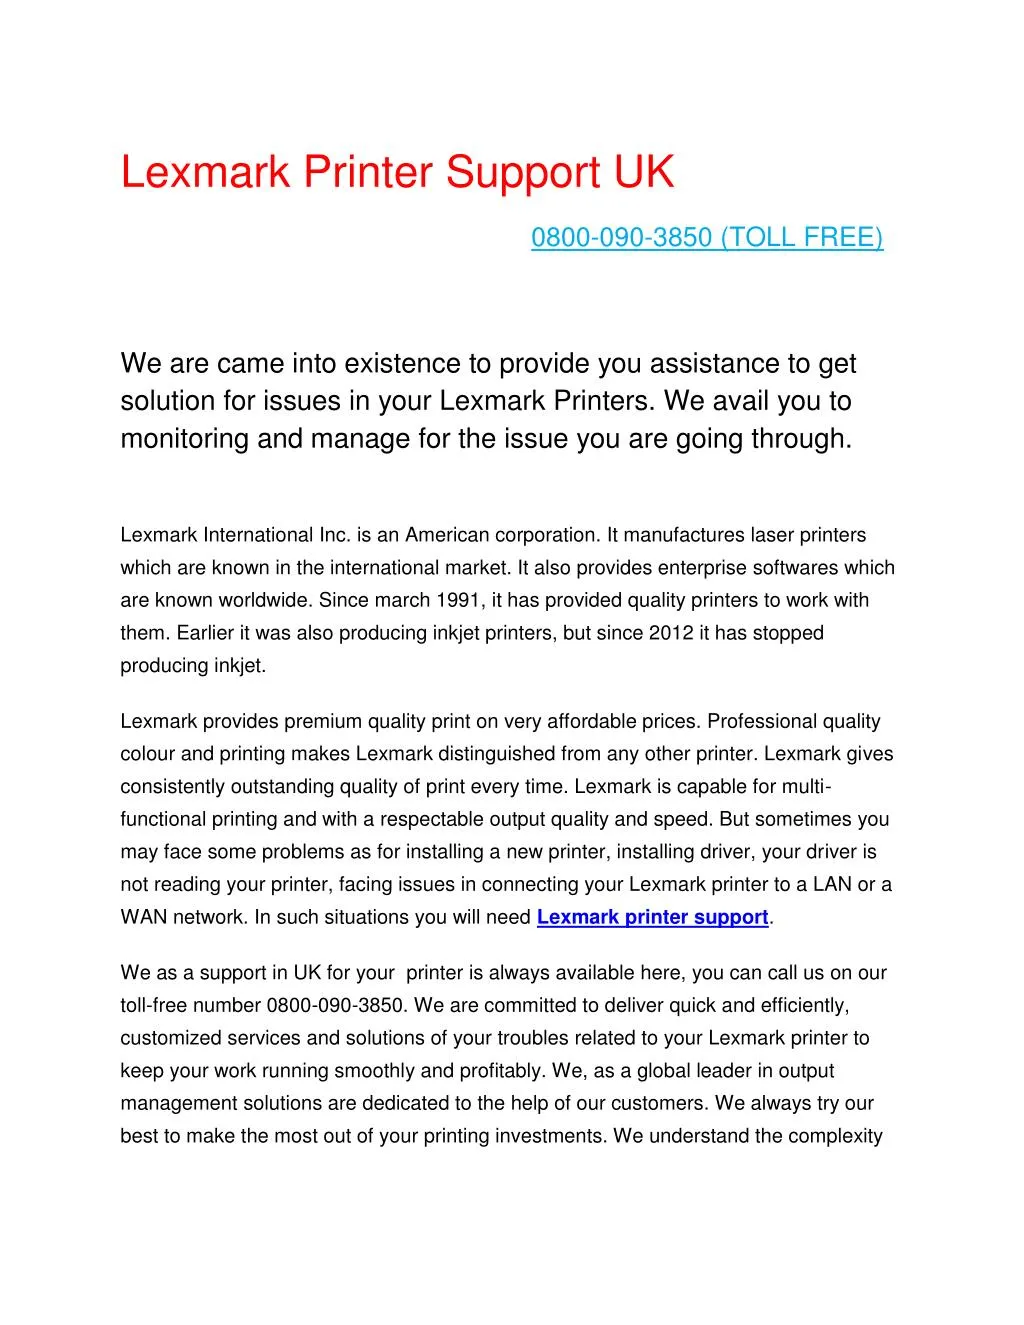 lexmark printer support uk 0800 090 3850 toll free